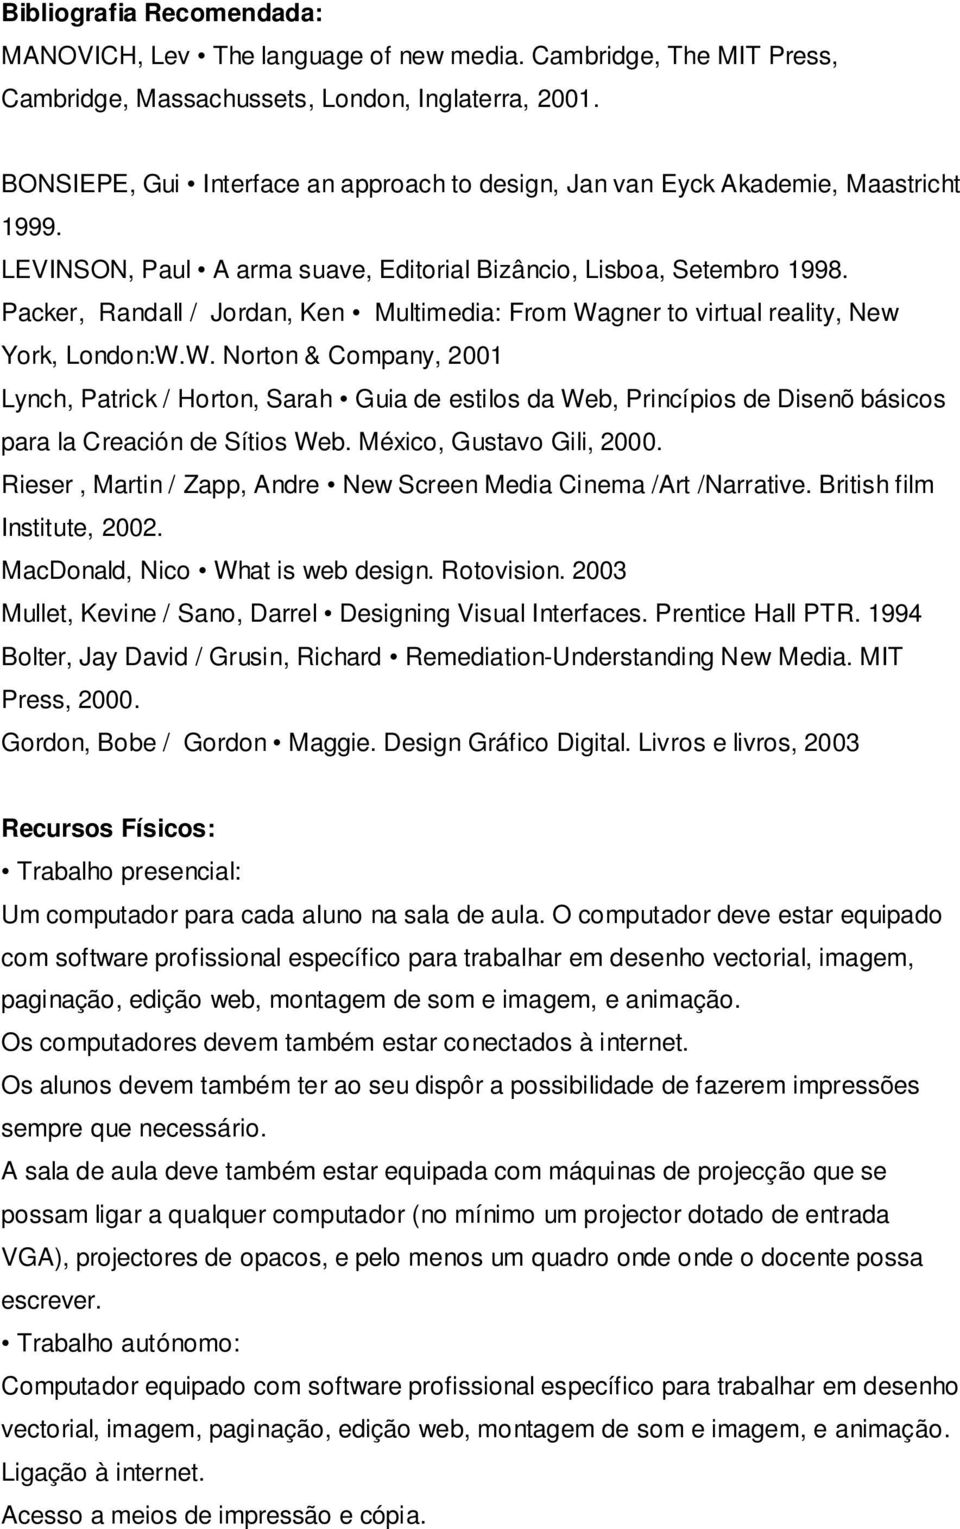 Packer, Randall / Jordan, Ken Multimedia: From Wagner to virtual reality, New York, London:W.W. Norton & Company, 2001 Lynch, Patrick / Horton, Sarah Guia de estilos da Web, Princípios de Disenõ básicos para la Creación de Sítios Web.